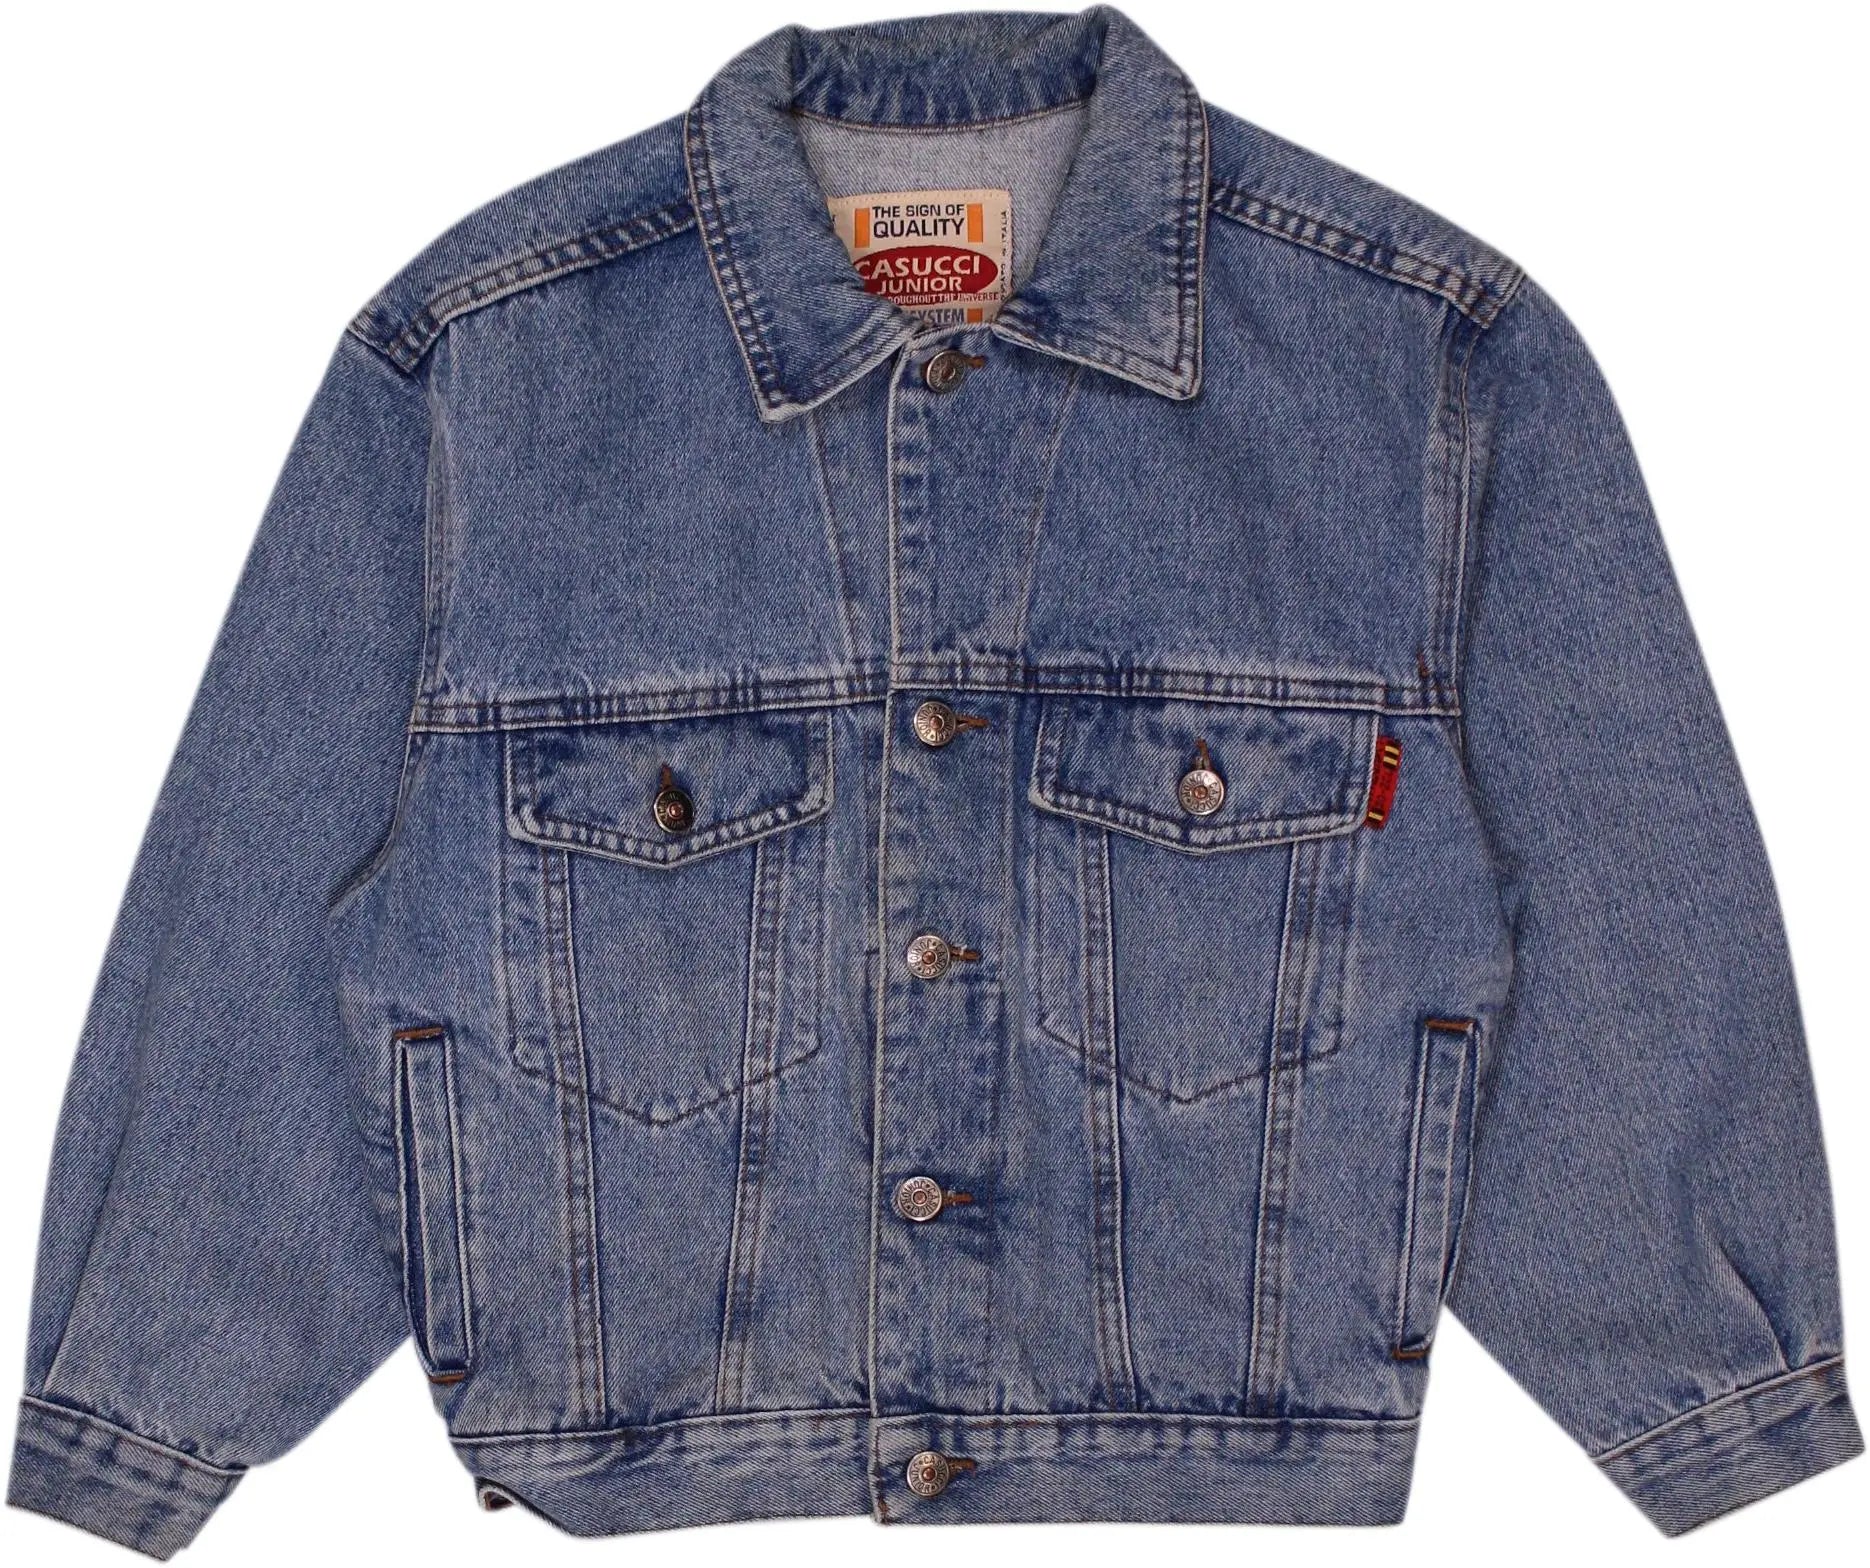 Casucci Junior - Blue Denim Jacket by Casucci- ThriftTale.com - Vintage and second handclothing